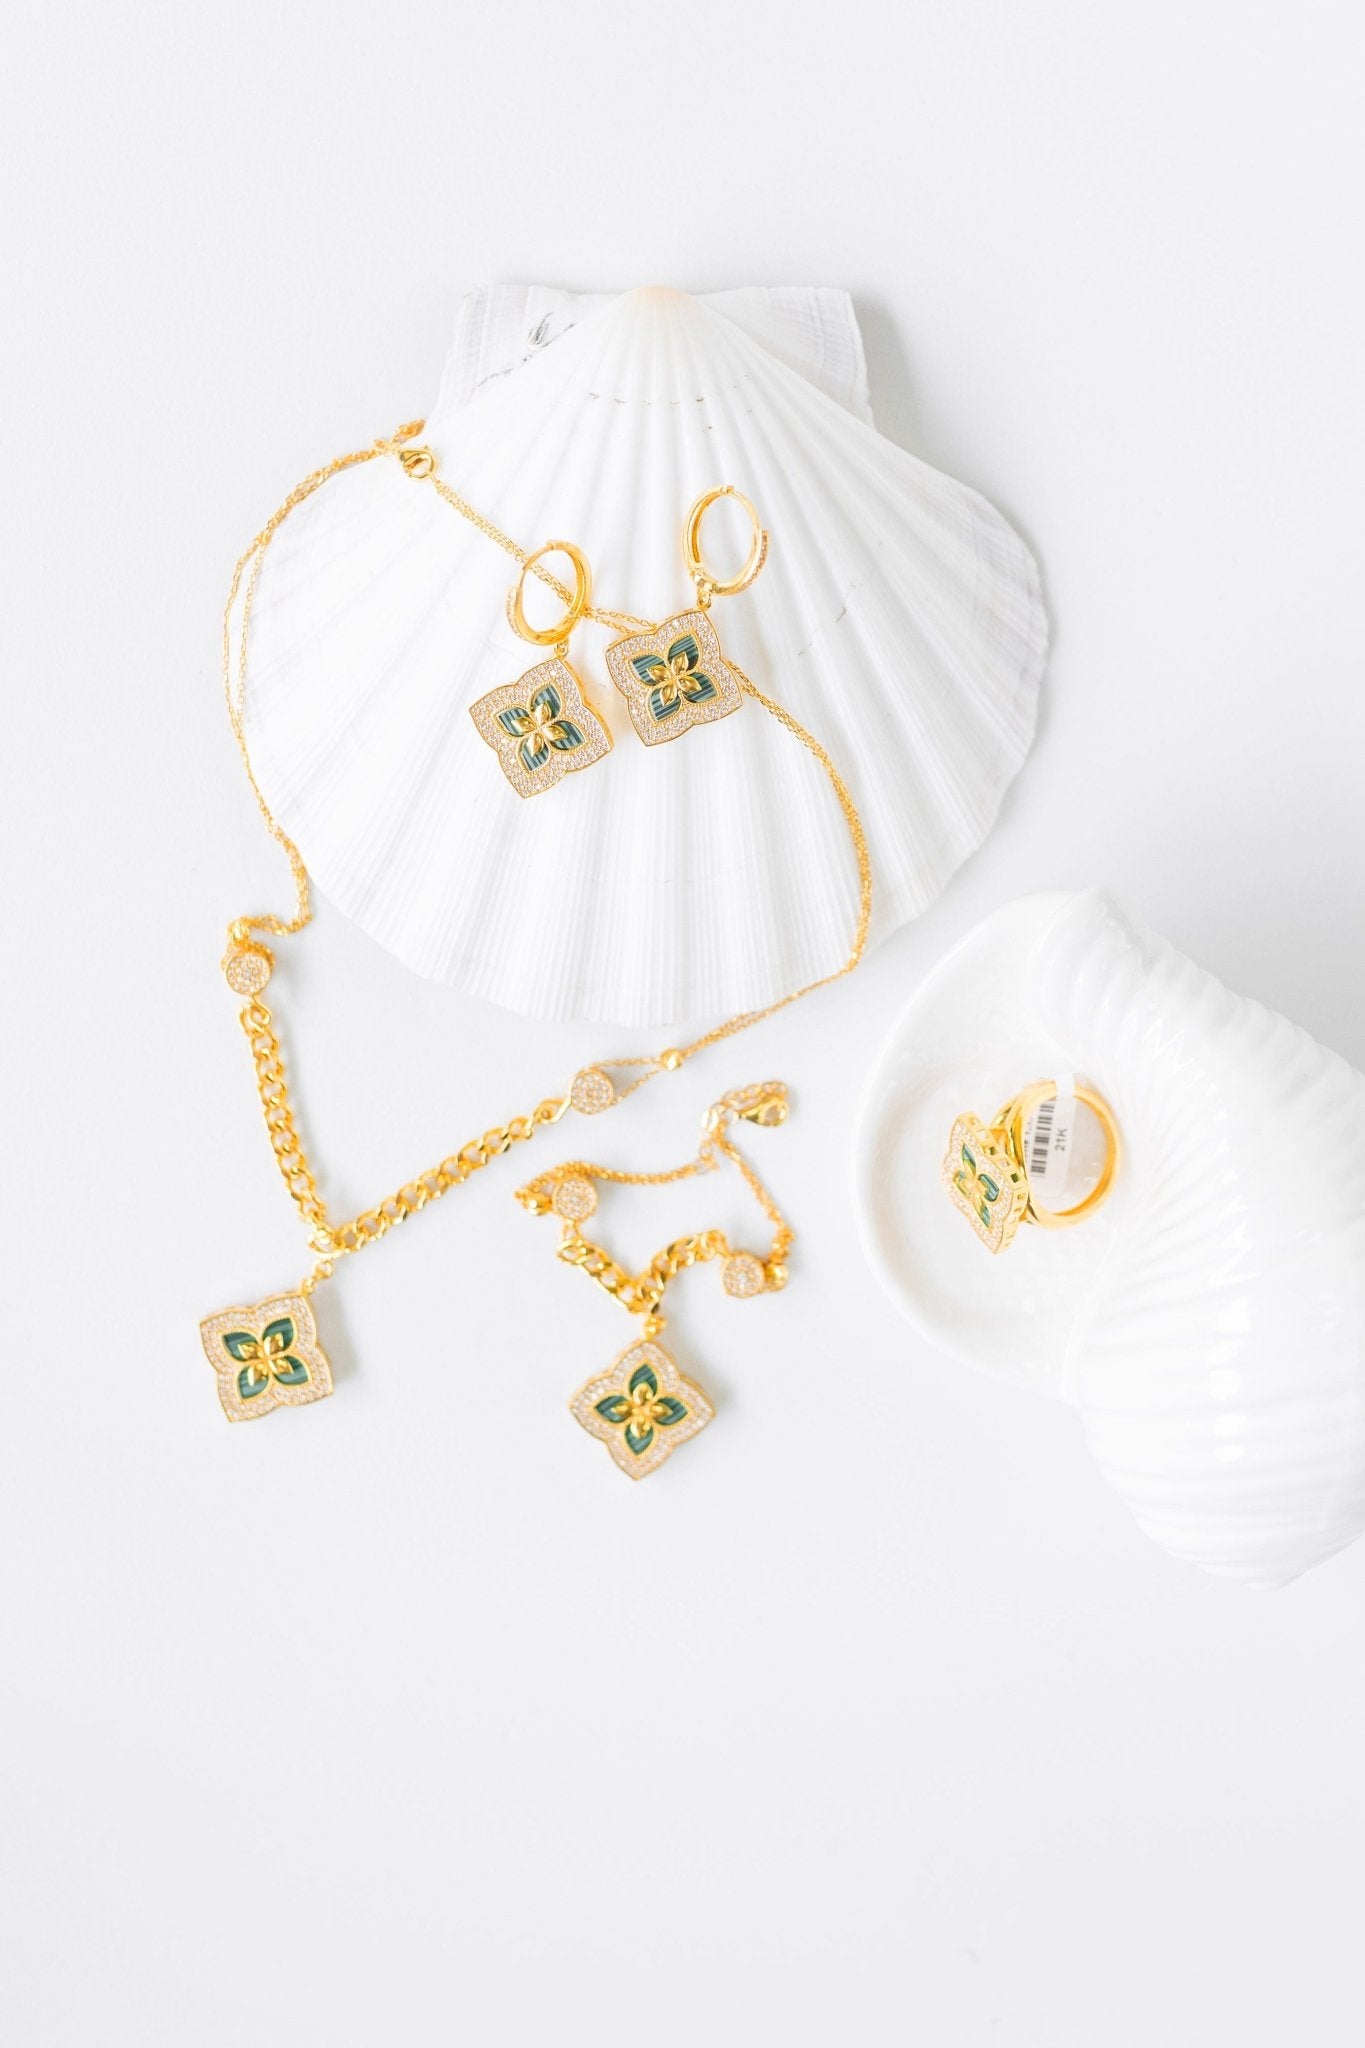 Copy of 21k Gold Set -Sample - Cleopatra Jewelers